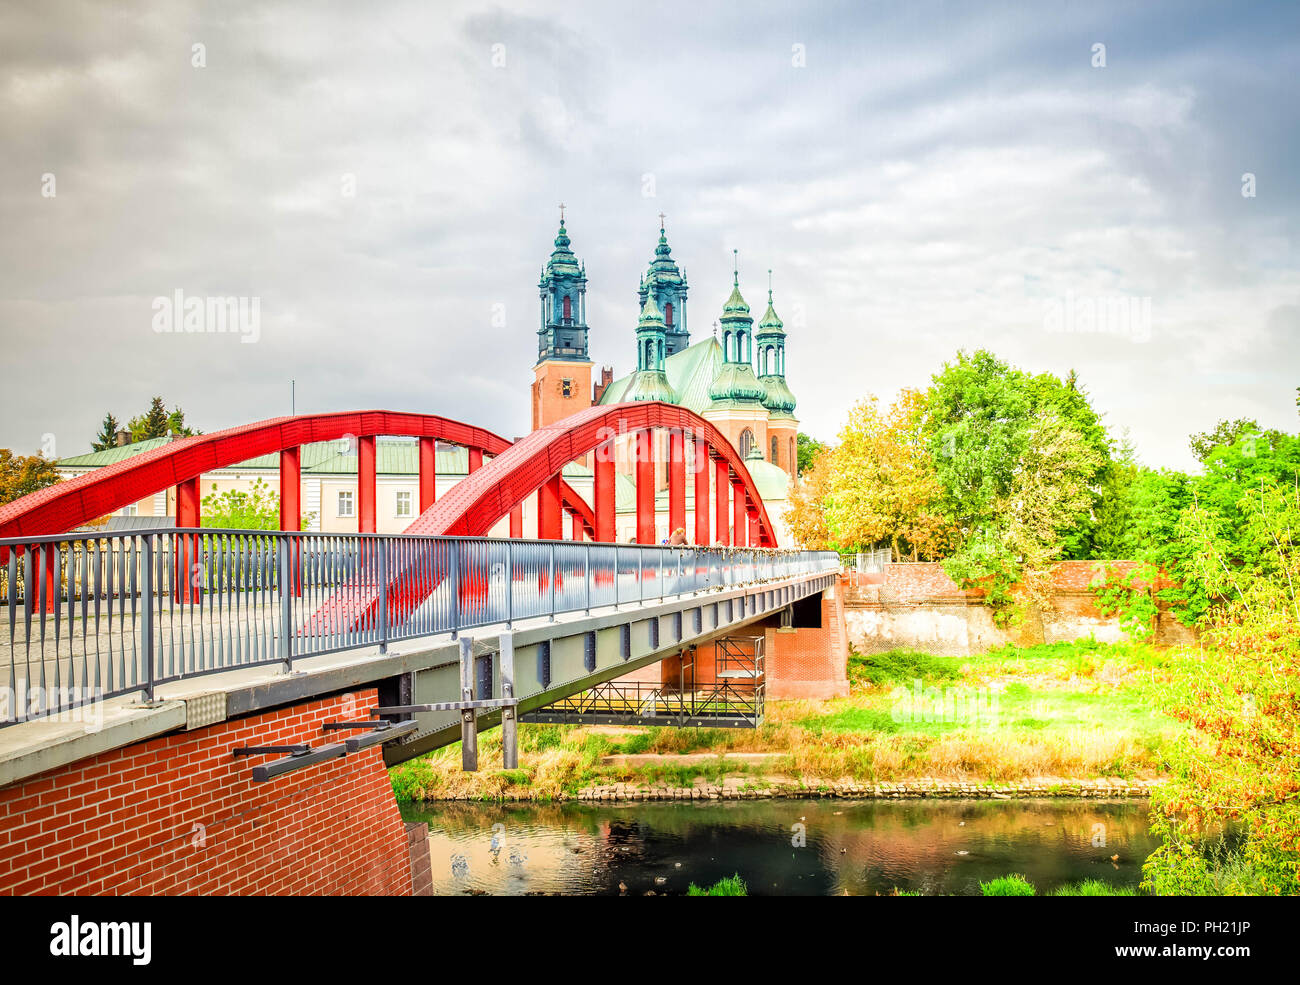 Jordan Bridge Poznan, Poland Stock Photo - Alamy